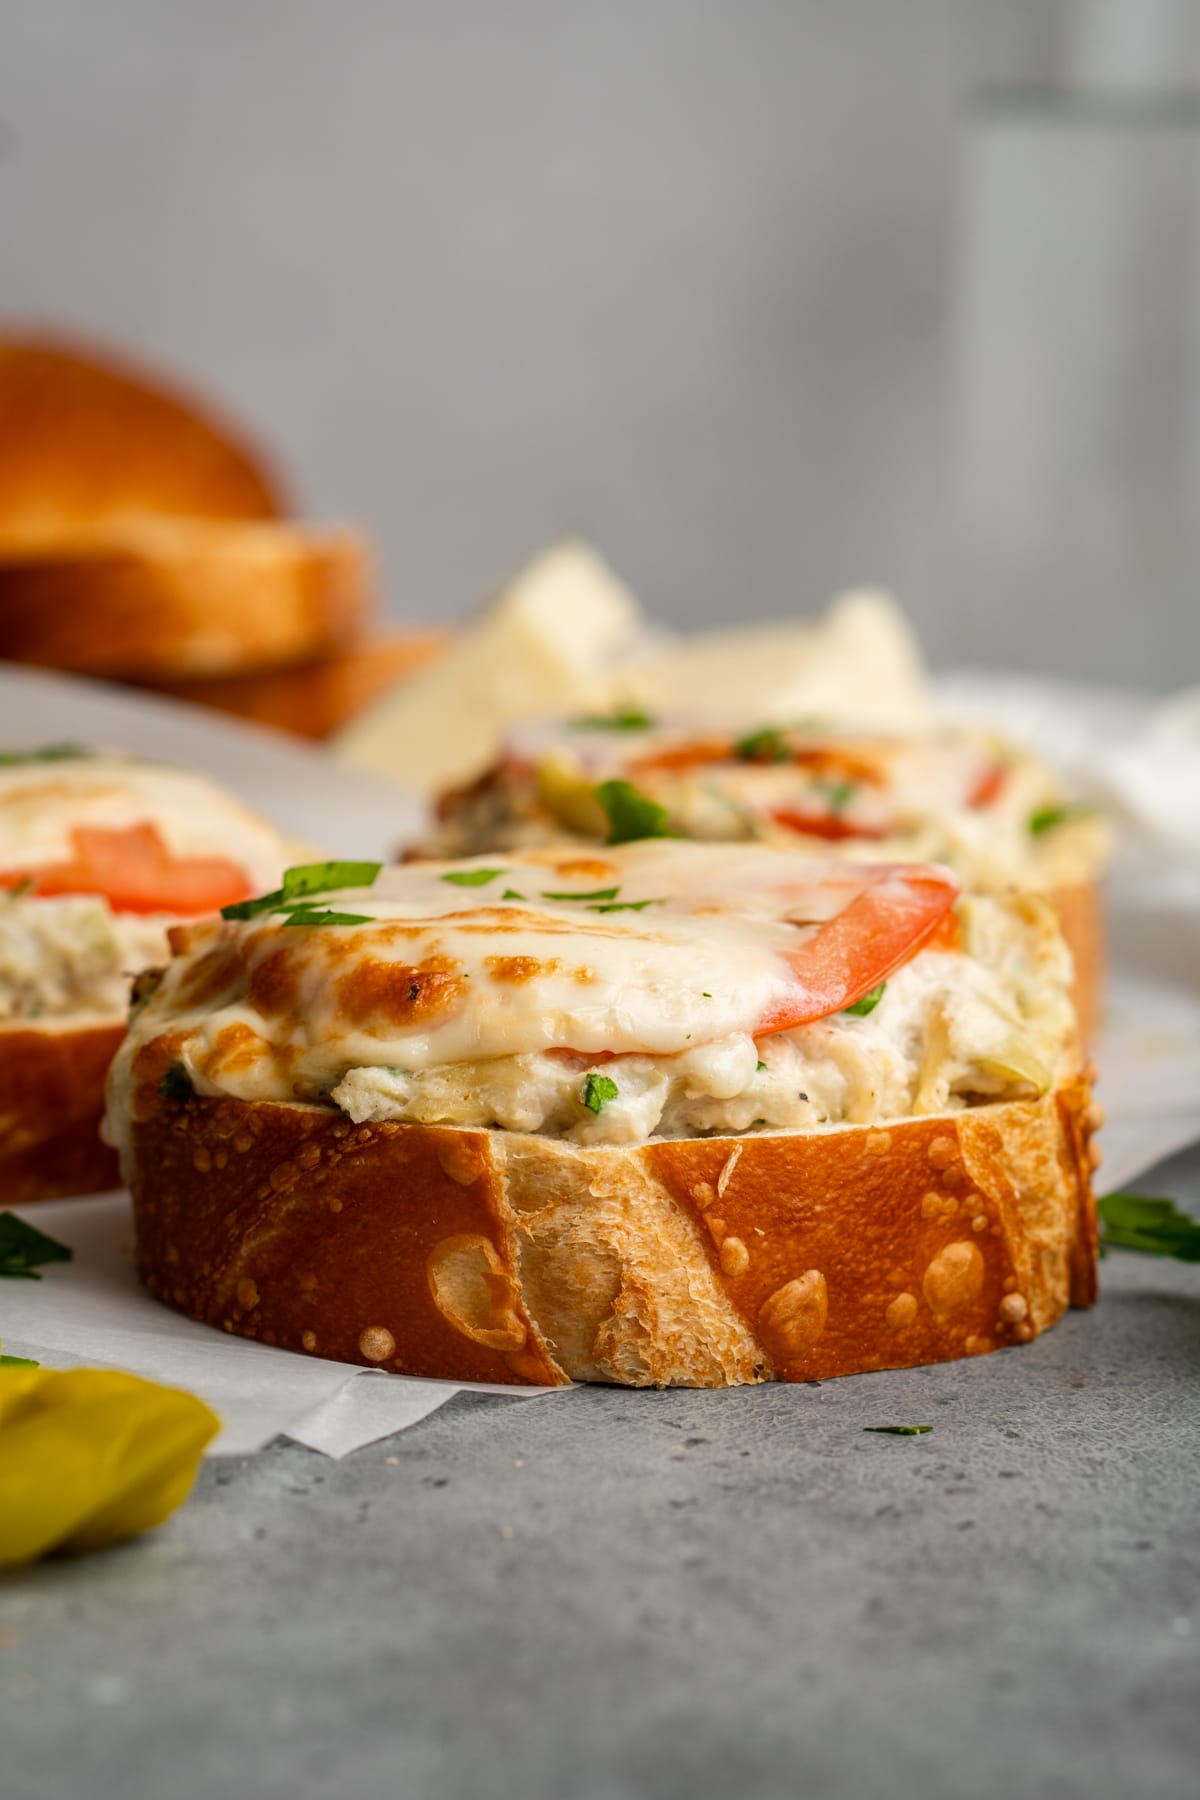 Crab and Artichoke Sandwich